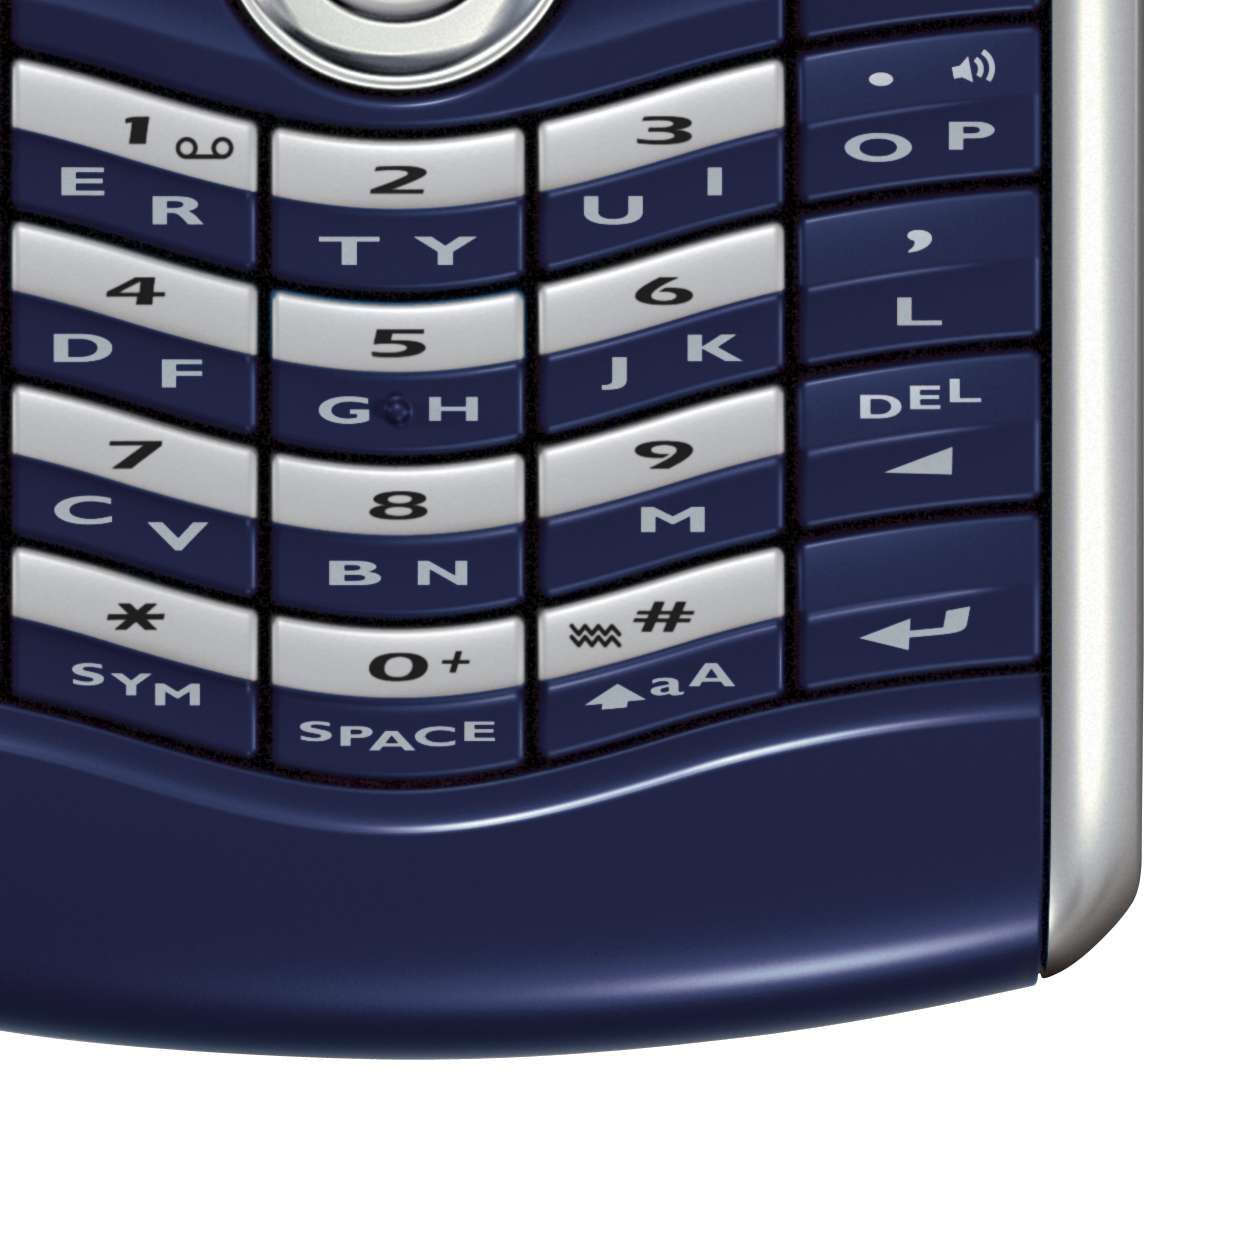 blackberry pearl 8120 smartphone image 1